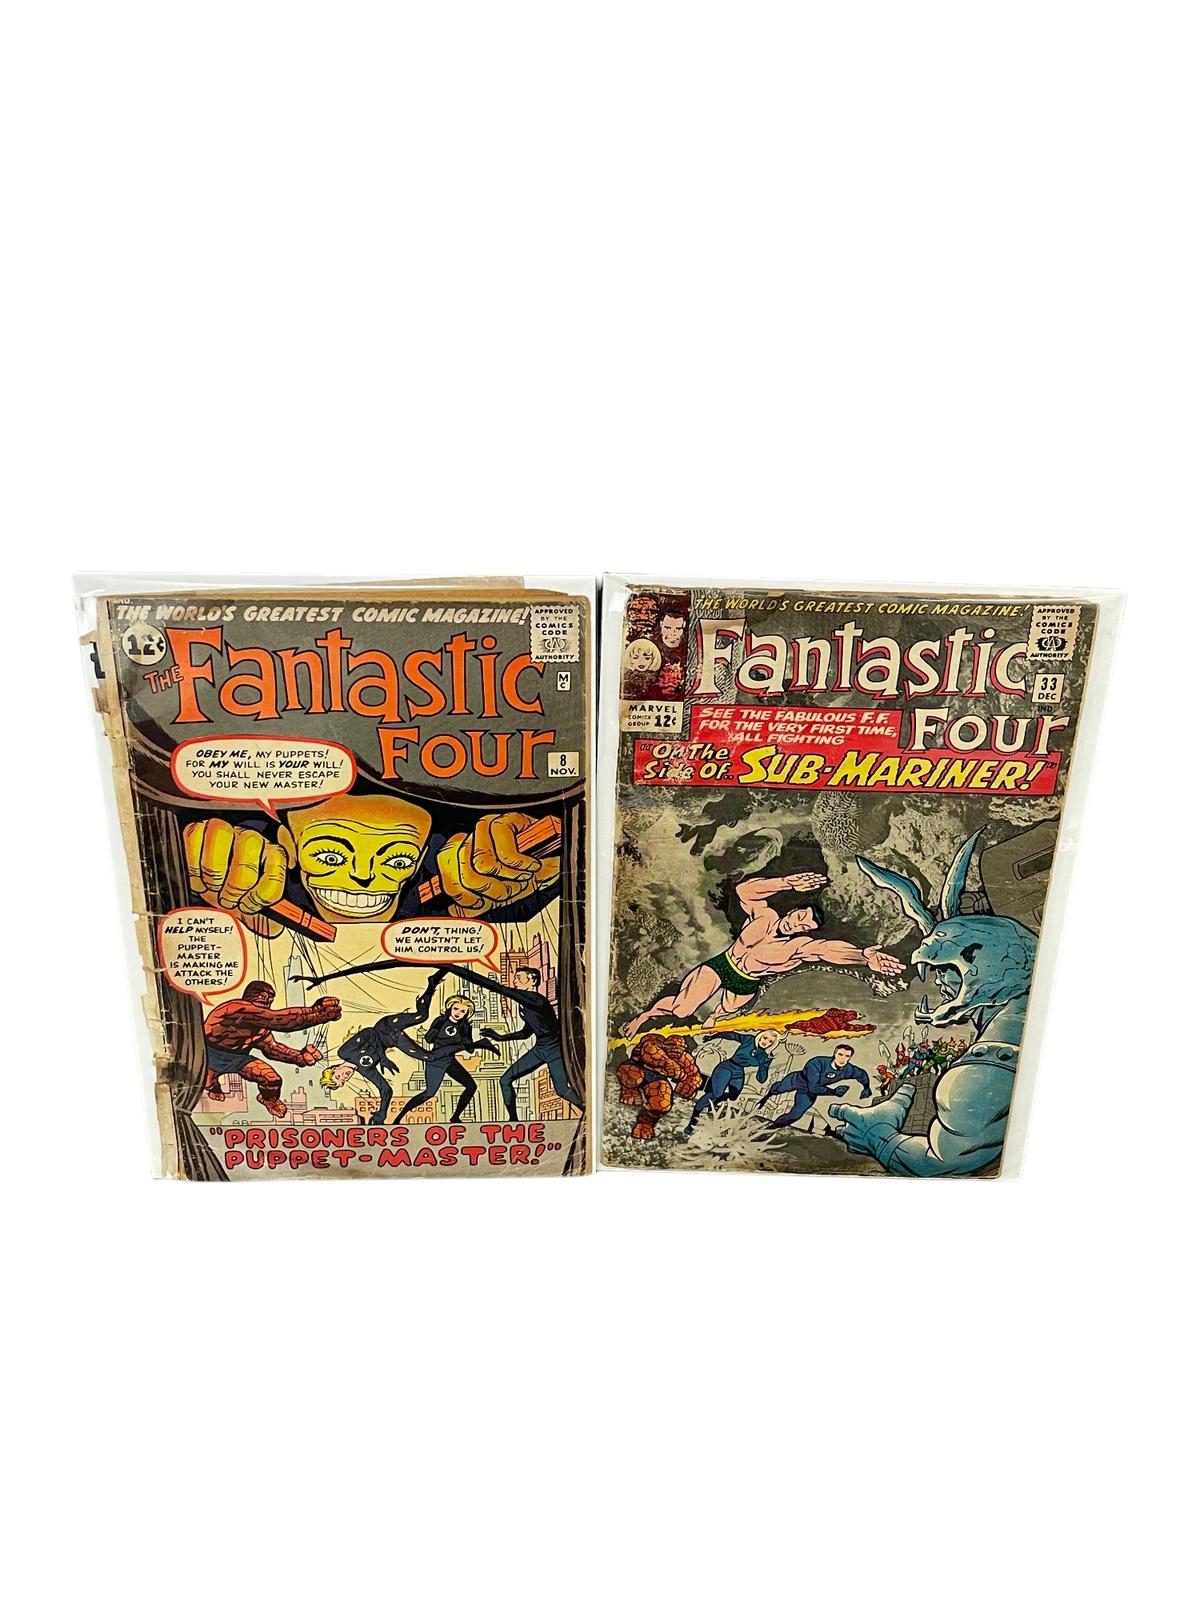 Fantastic Four #8 & #33 Vintage Comic Book Collection